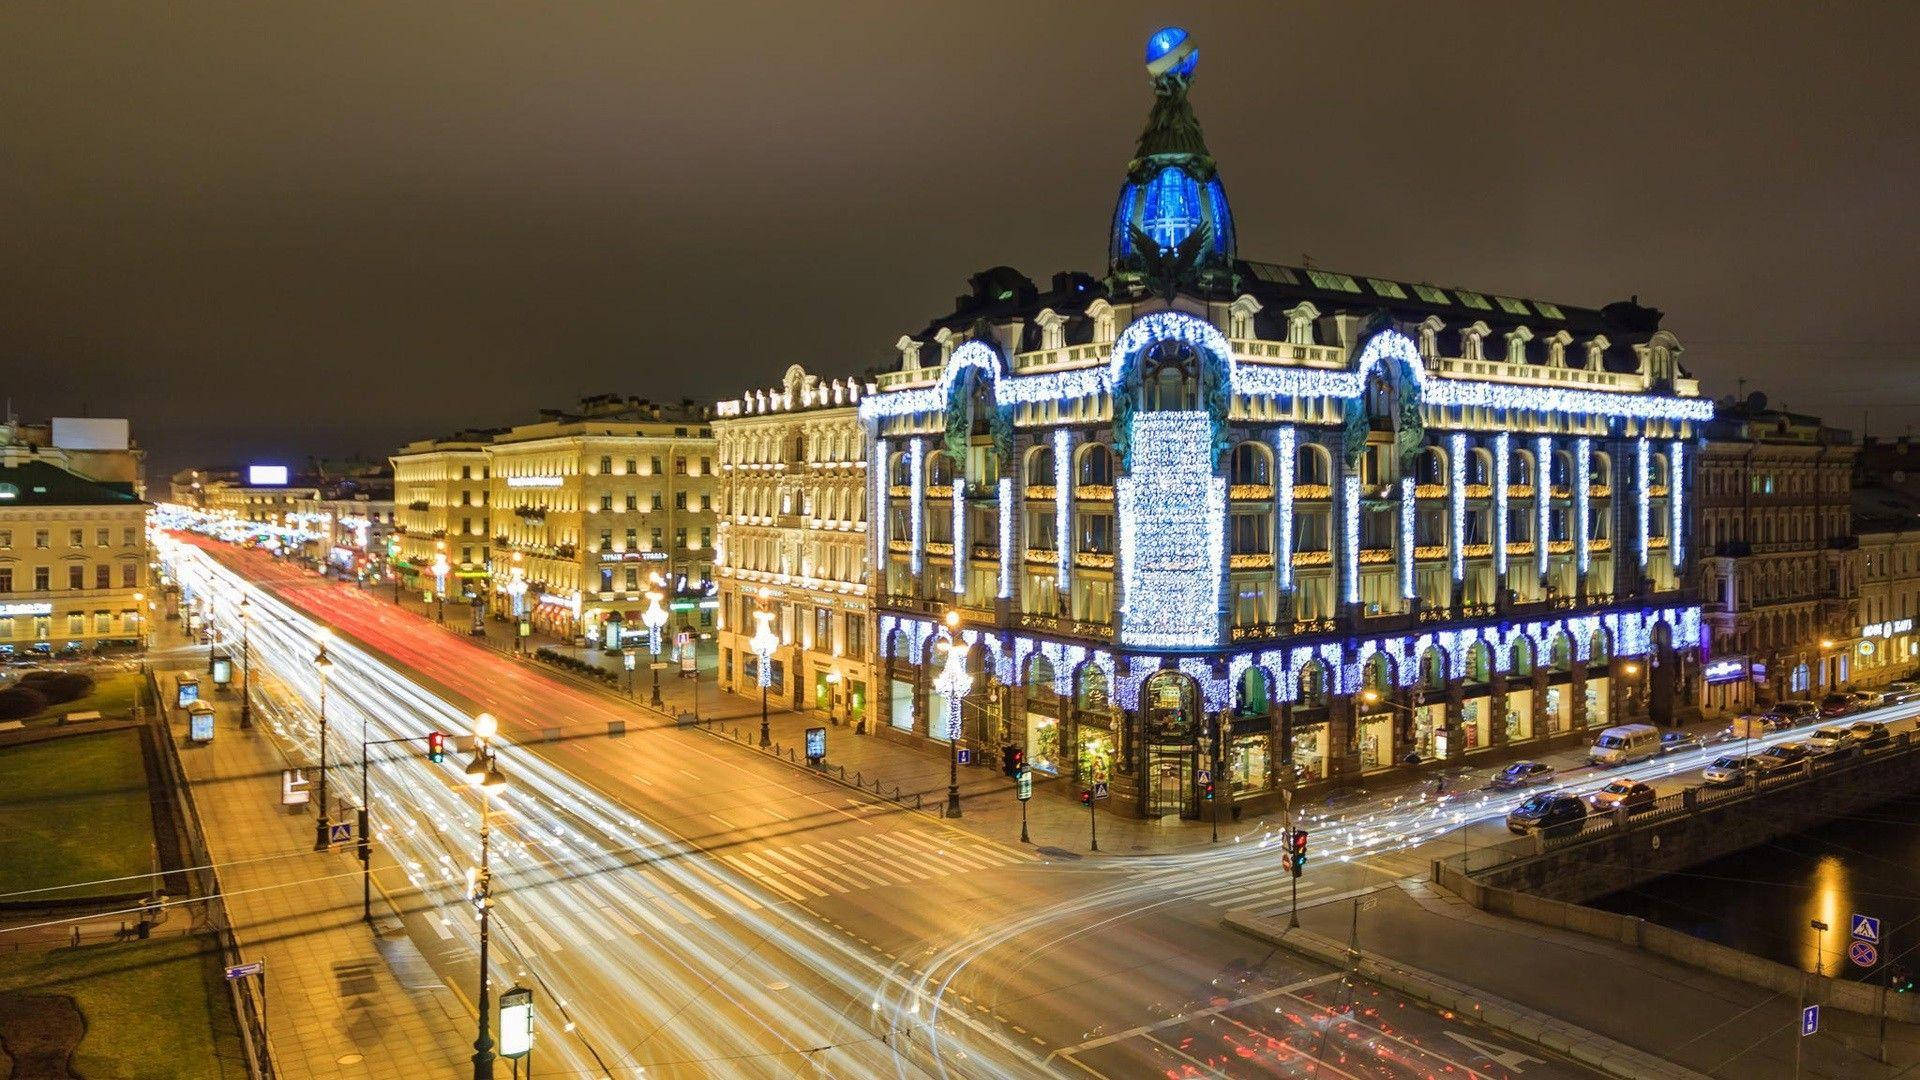 Caption: Iconic Singer Café Building In The Heart Of Saint Petersburg